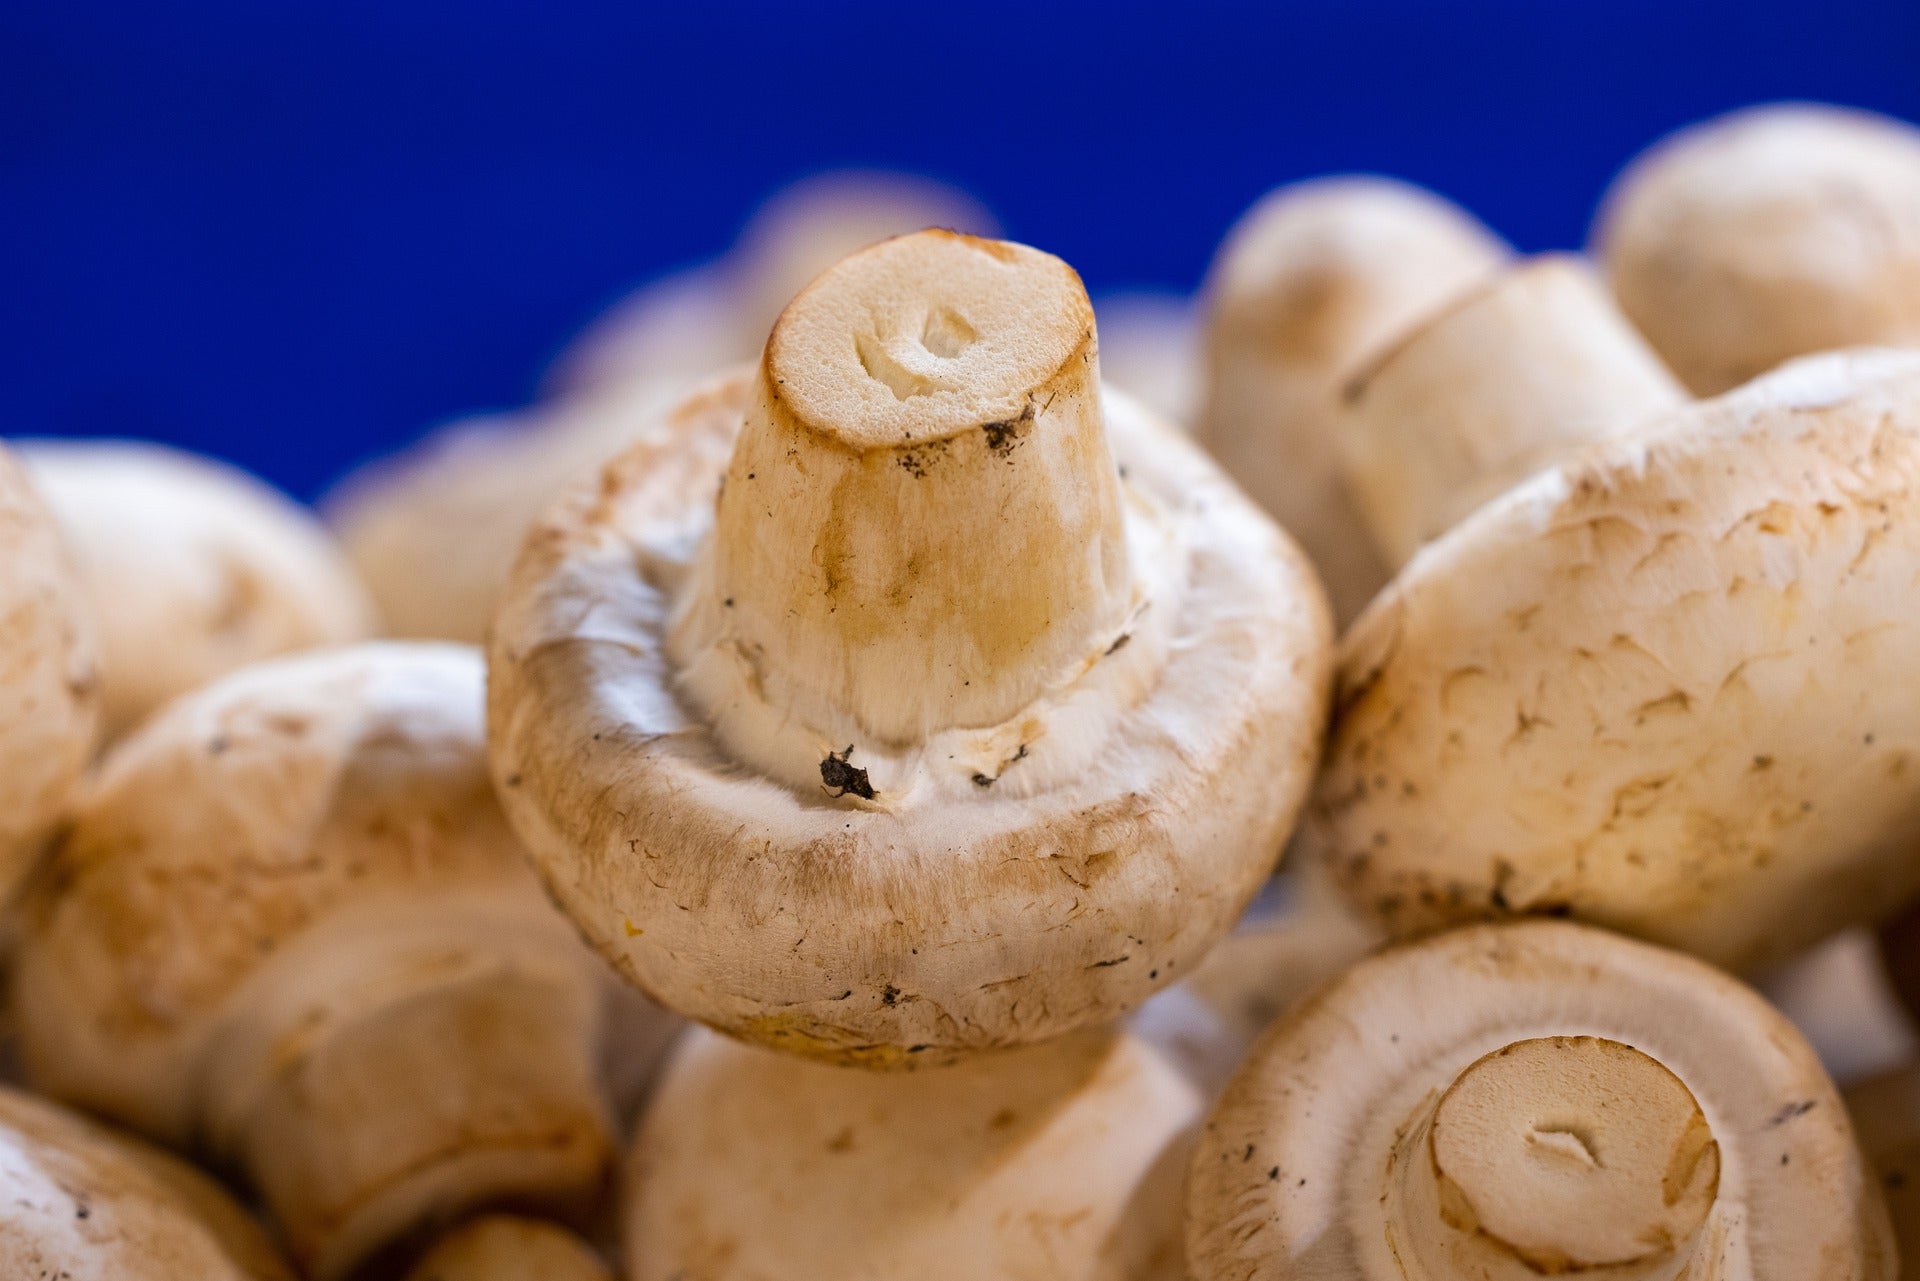 White Fuzz on Mushroom stem - Safe to eat or should I throw it away? 